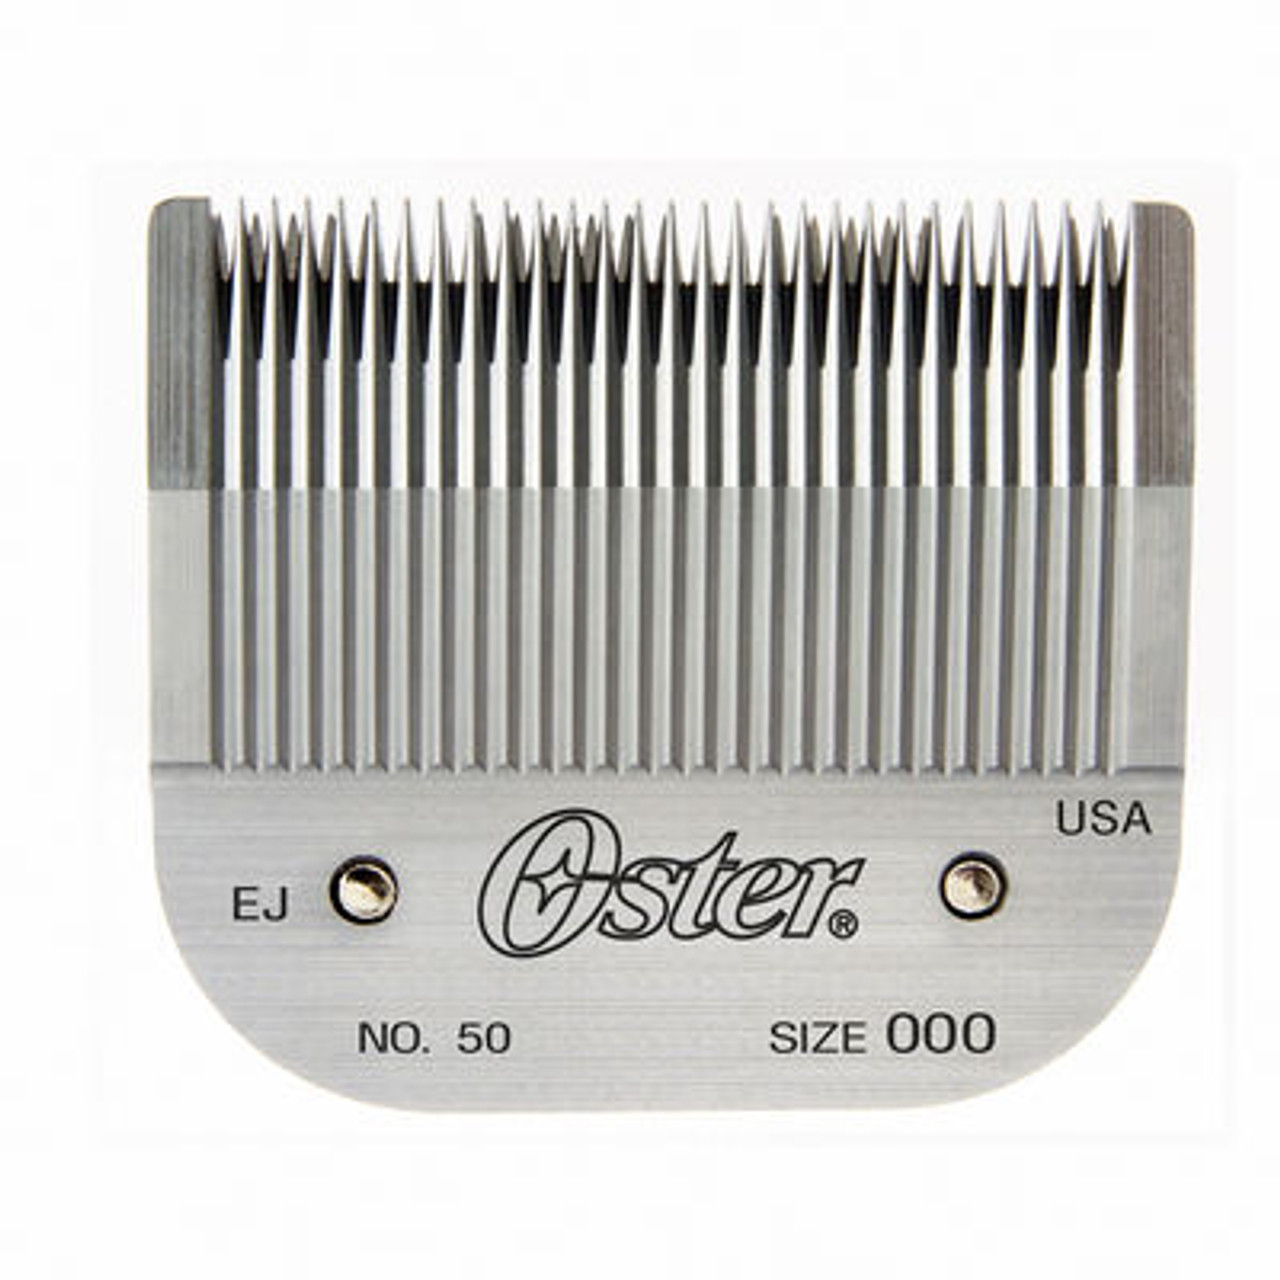 oster hair clipper attachments